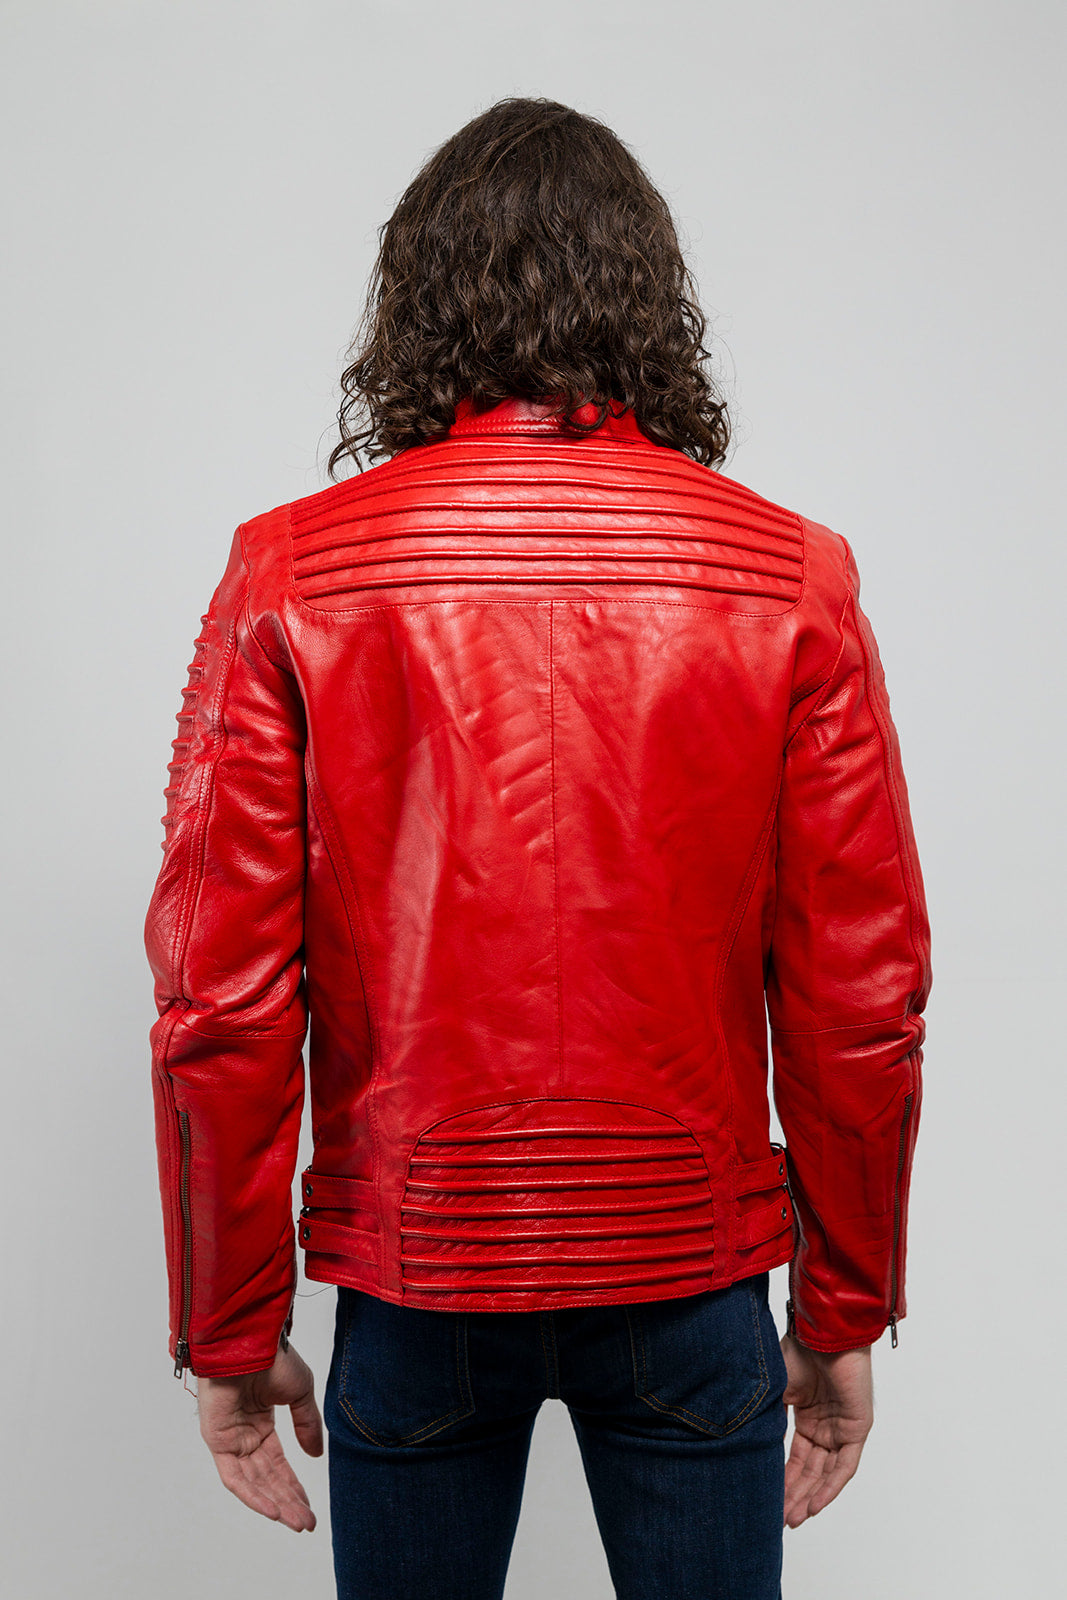 Brooklyn Mens Lambskin Leather Jacket Fire Red Men's Motorcycle style Jacket Whet Blu NYC   